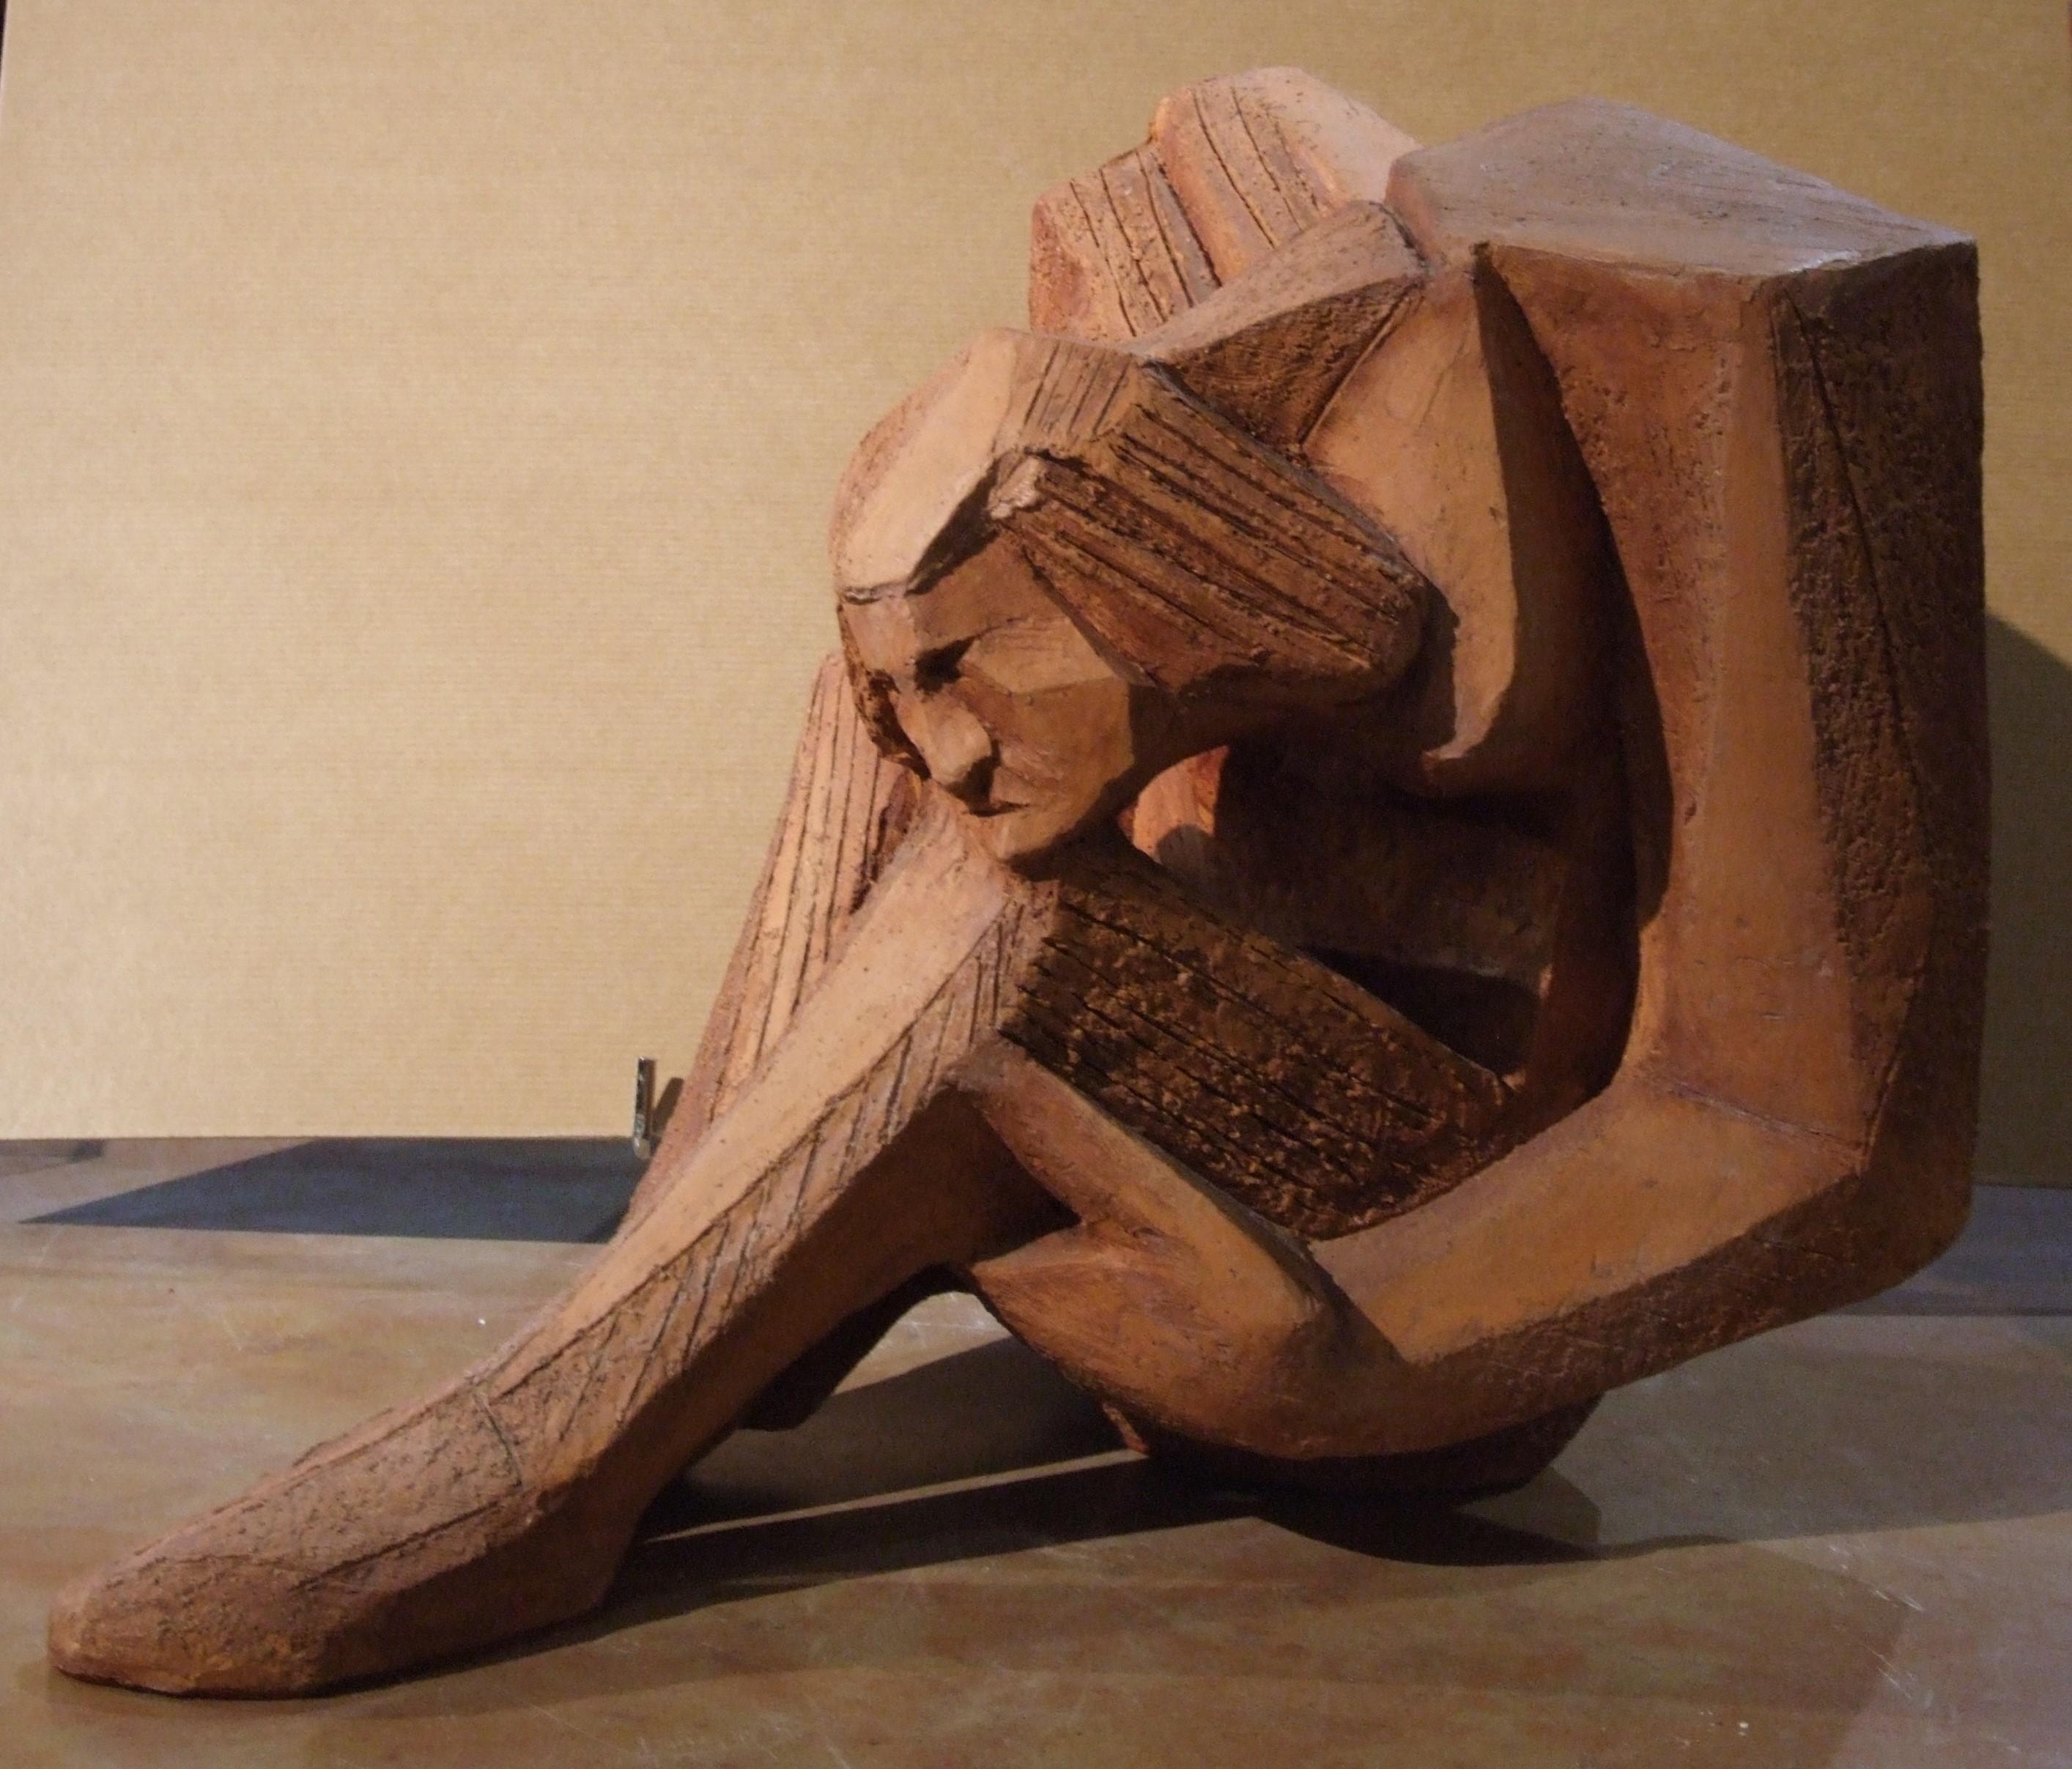 Unknown Figurative Sculpture - seated man,  '70s - clay sculpture, 36x30x23 cm.